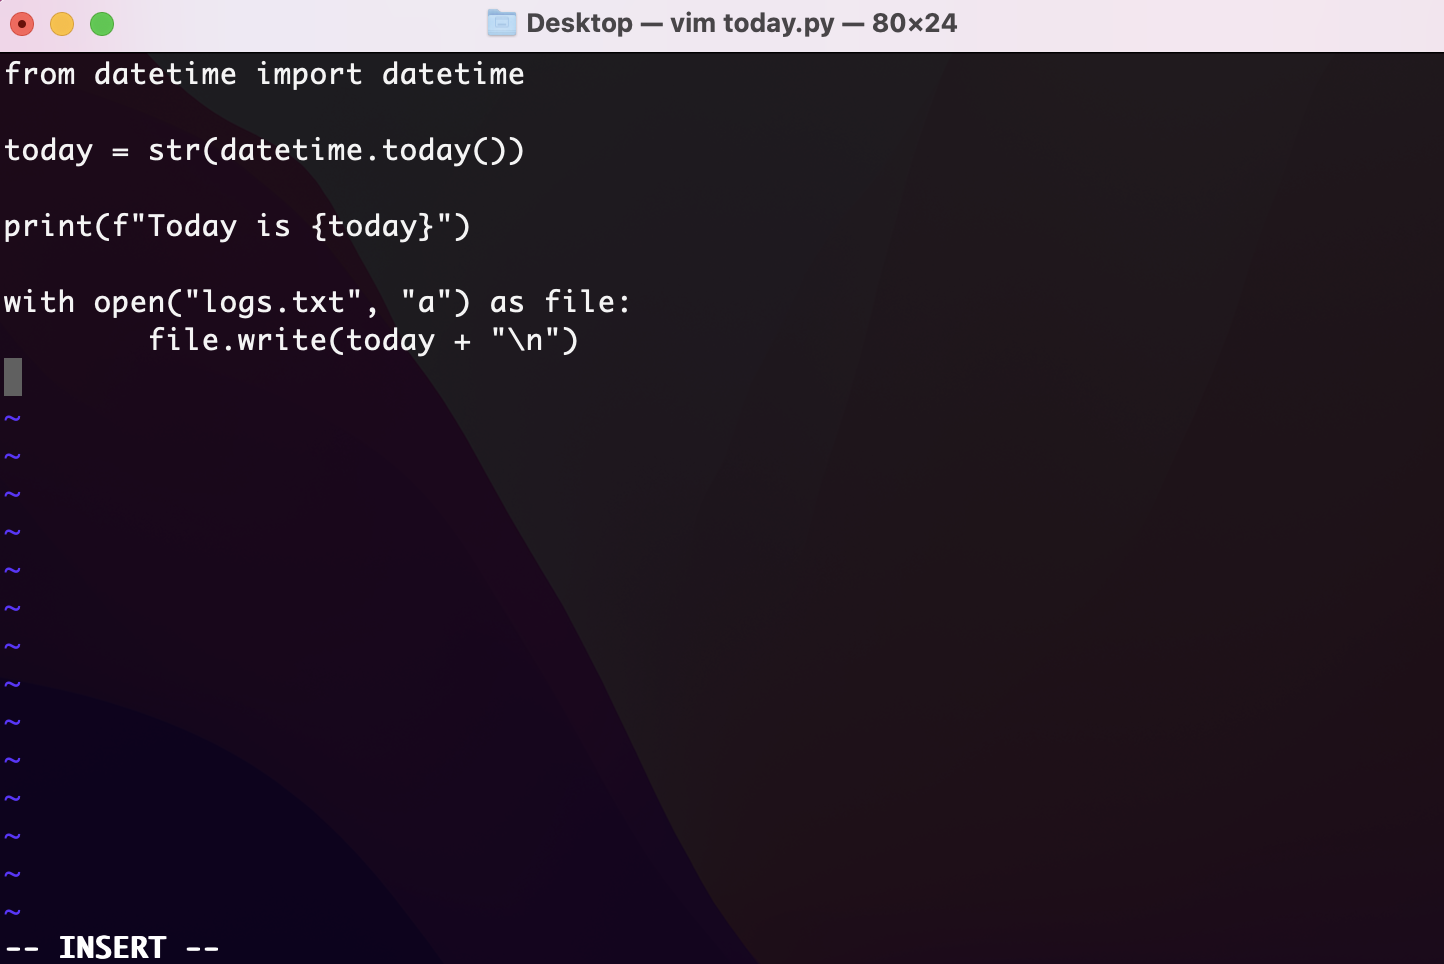 open python files in terminal